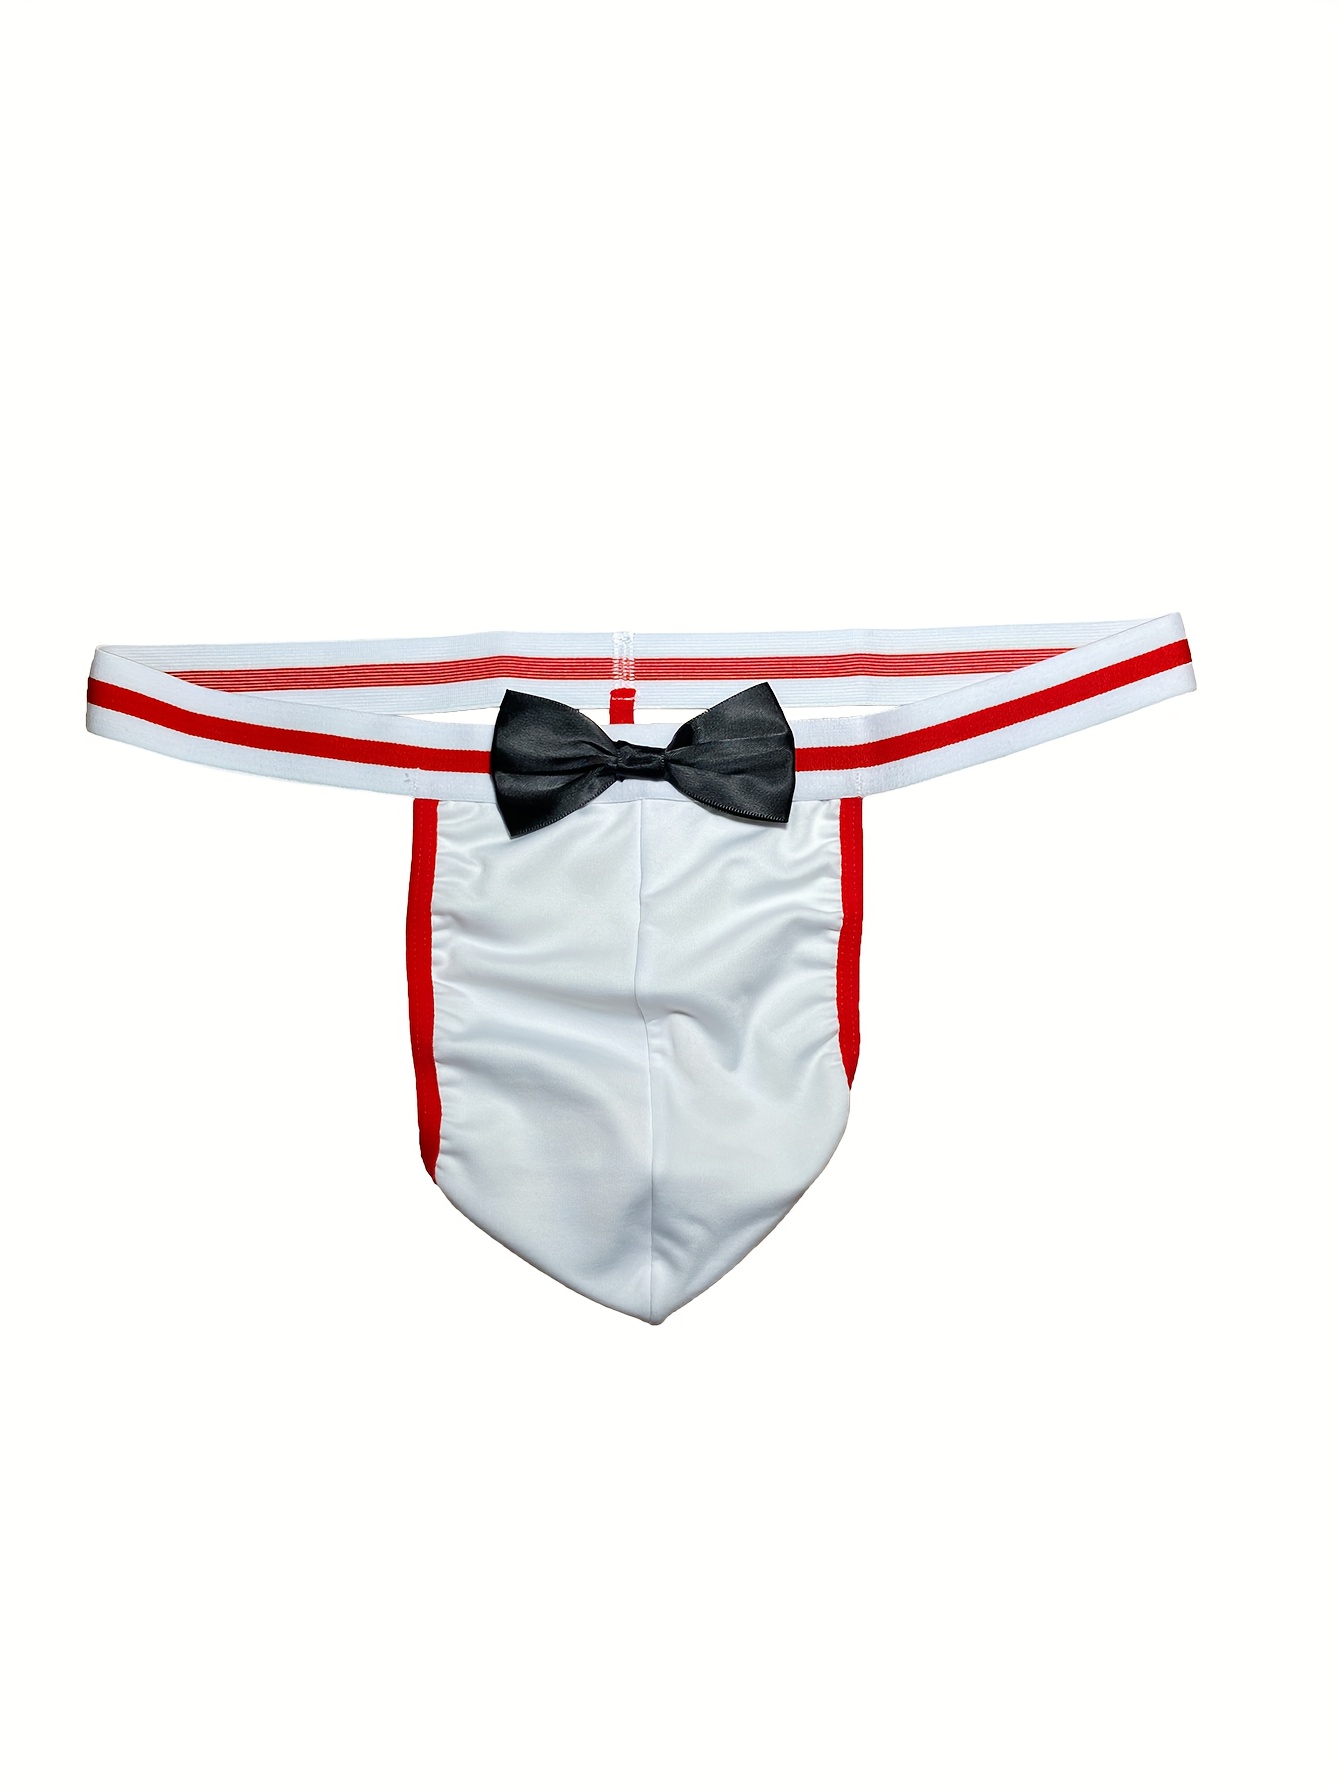 Buy Men's Sexy Collared Bow Tie Bodysuit Thong Butler Teddy